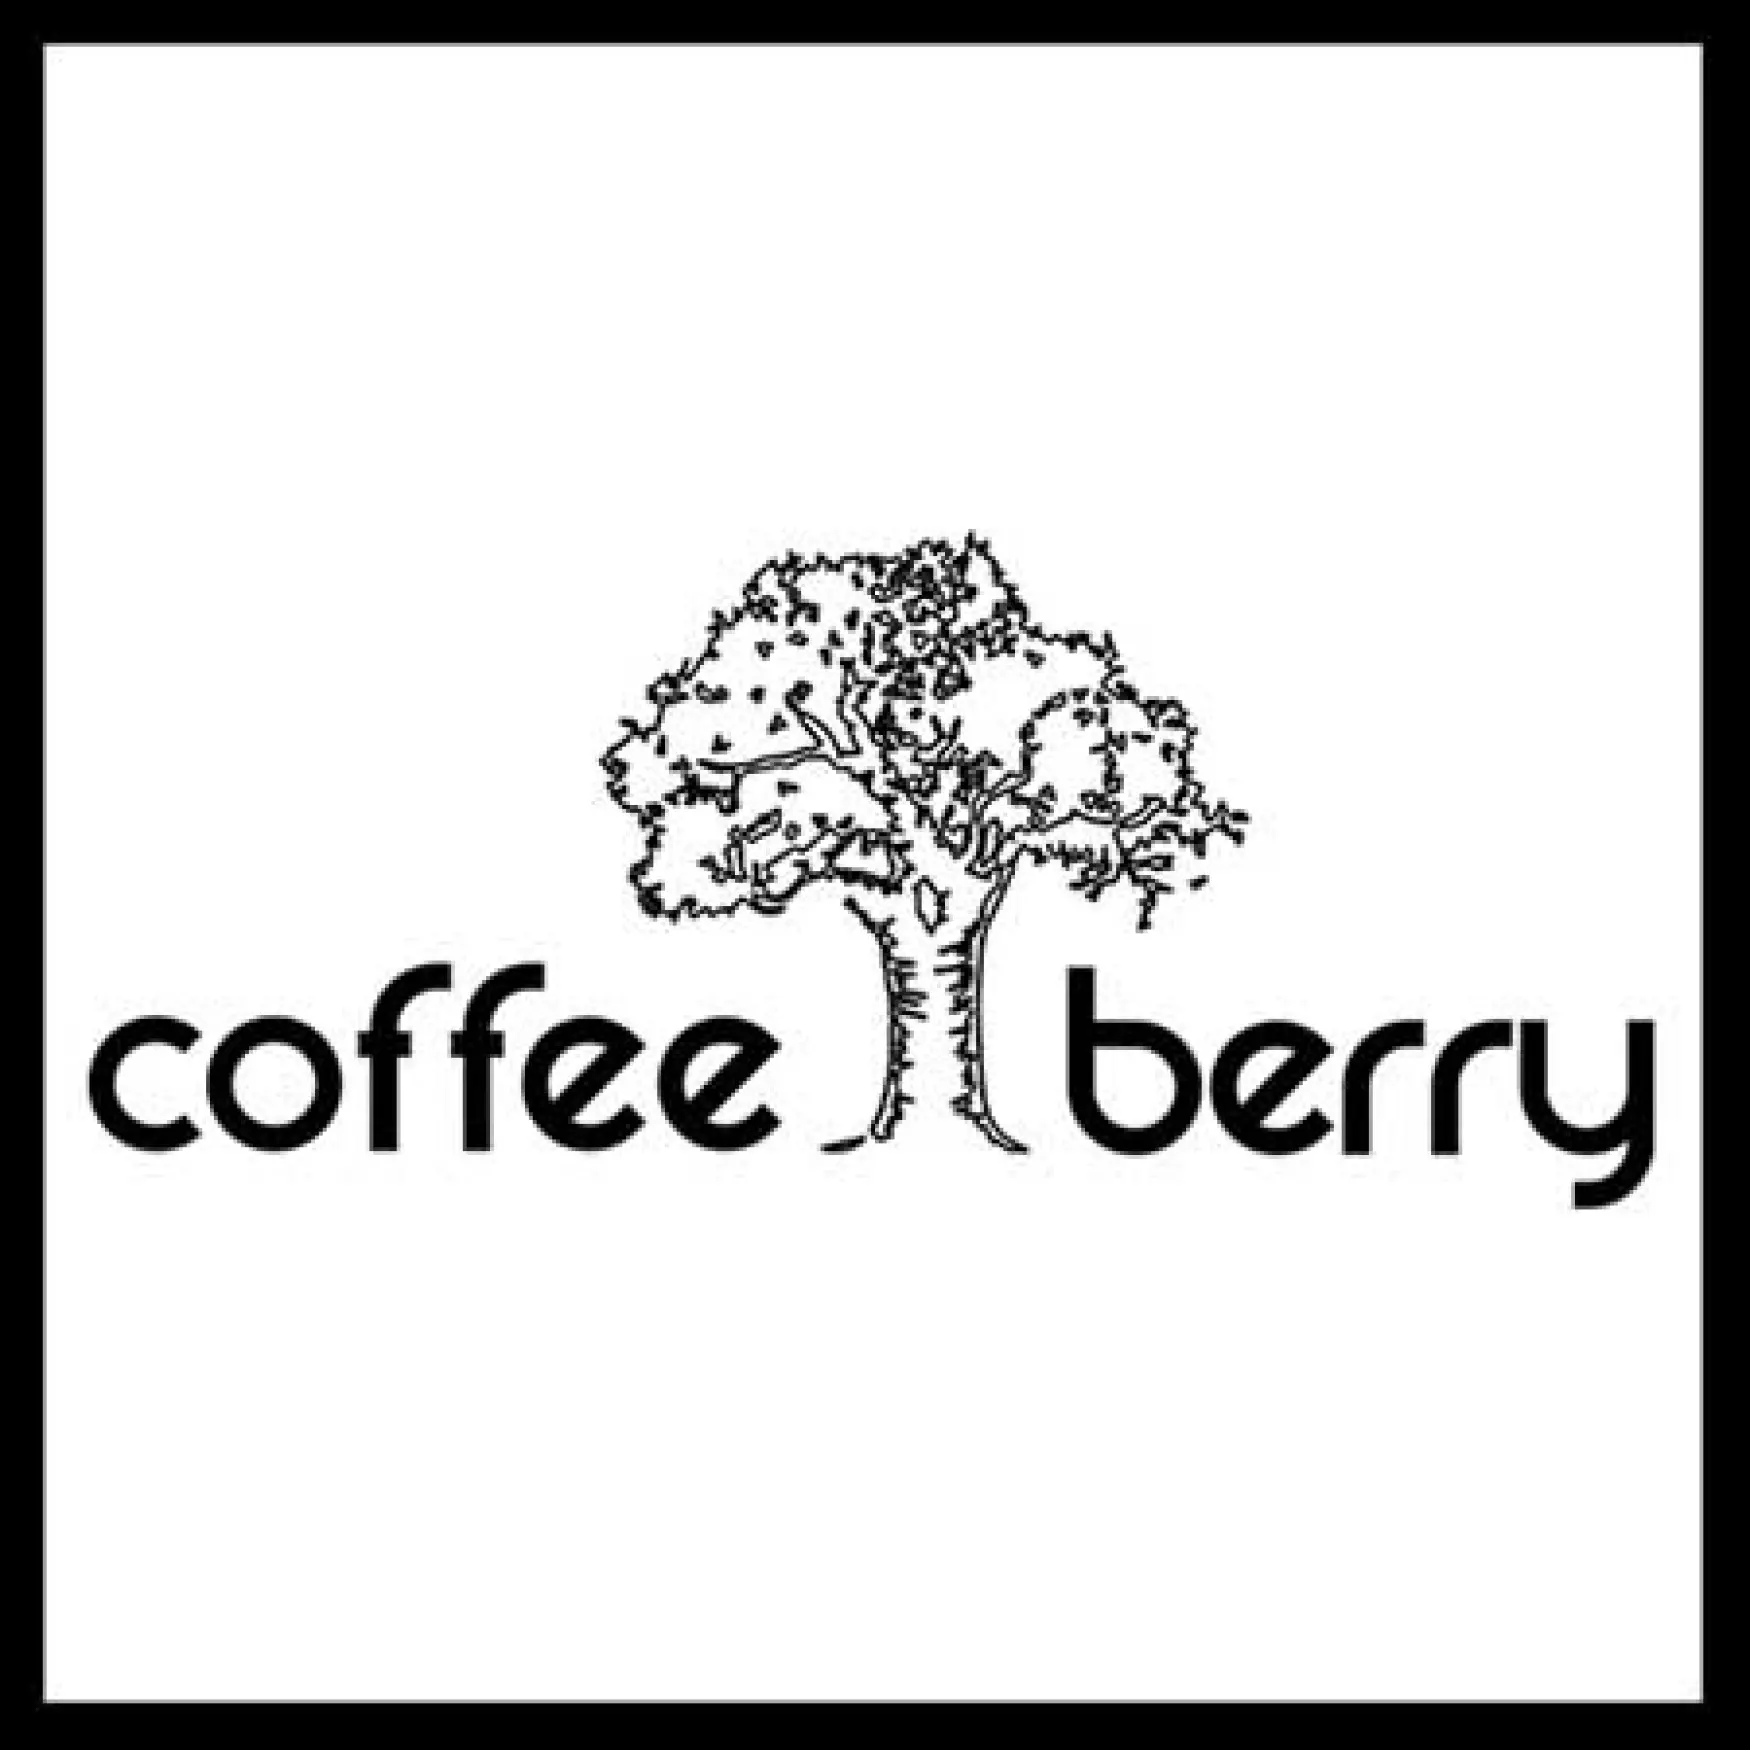 COFFEE BERRY